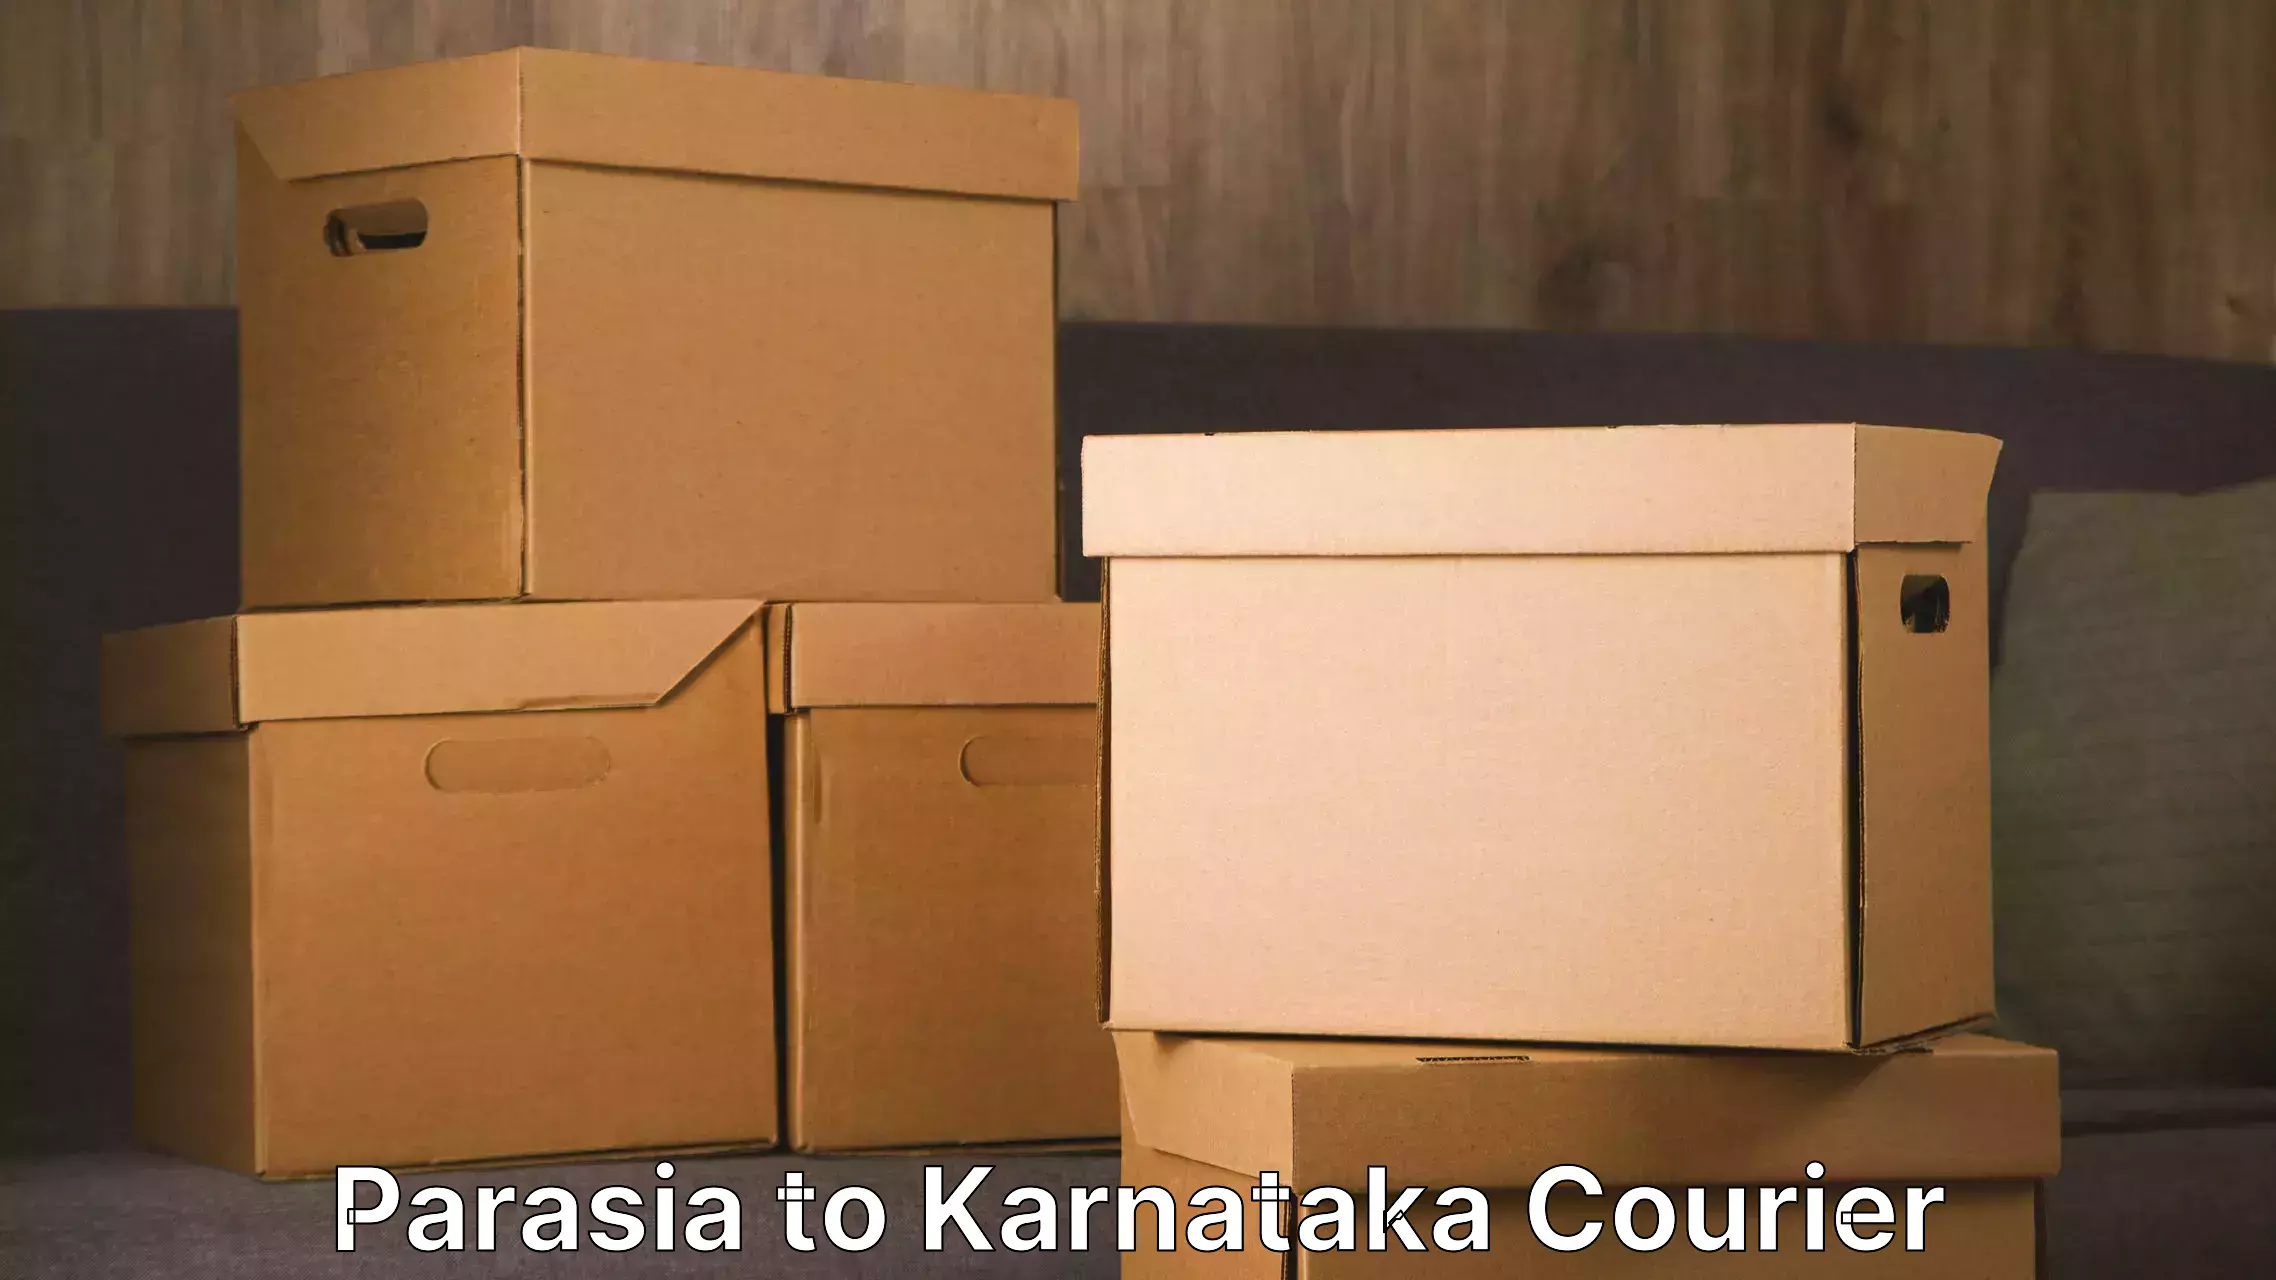 Furniture delivery service Parasia to Karnataka